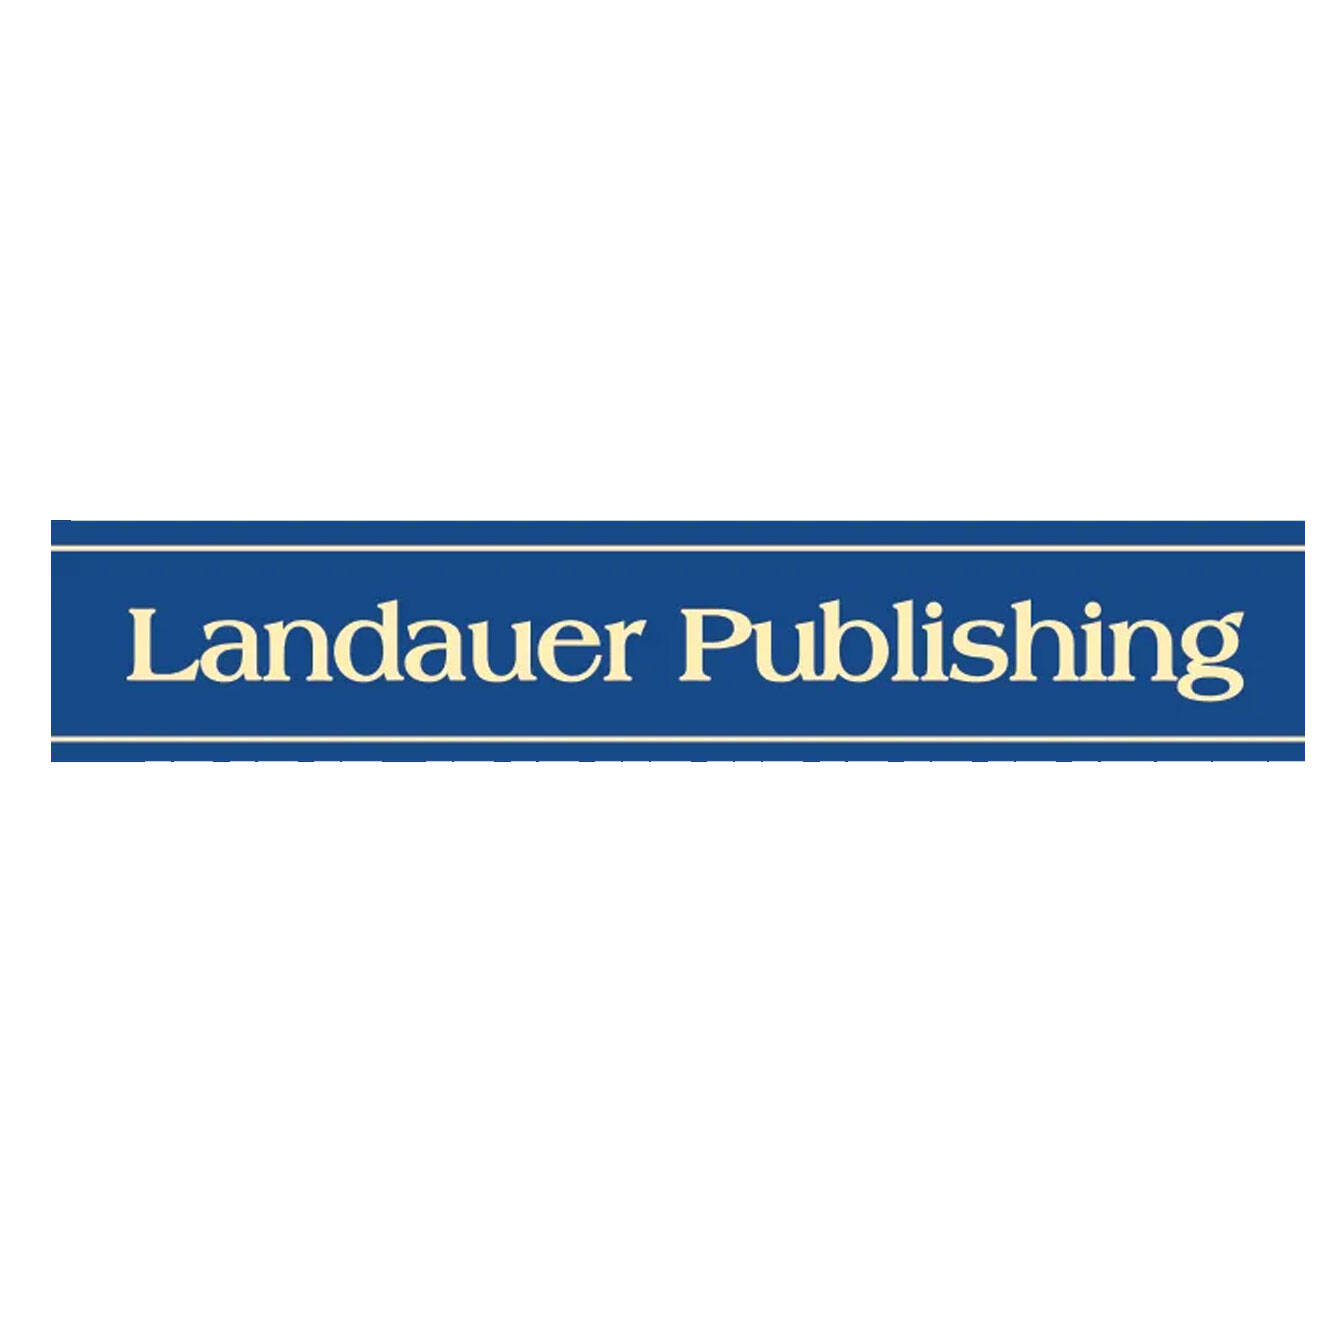 Landauer Publishing